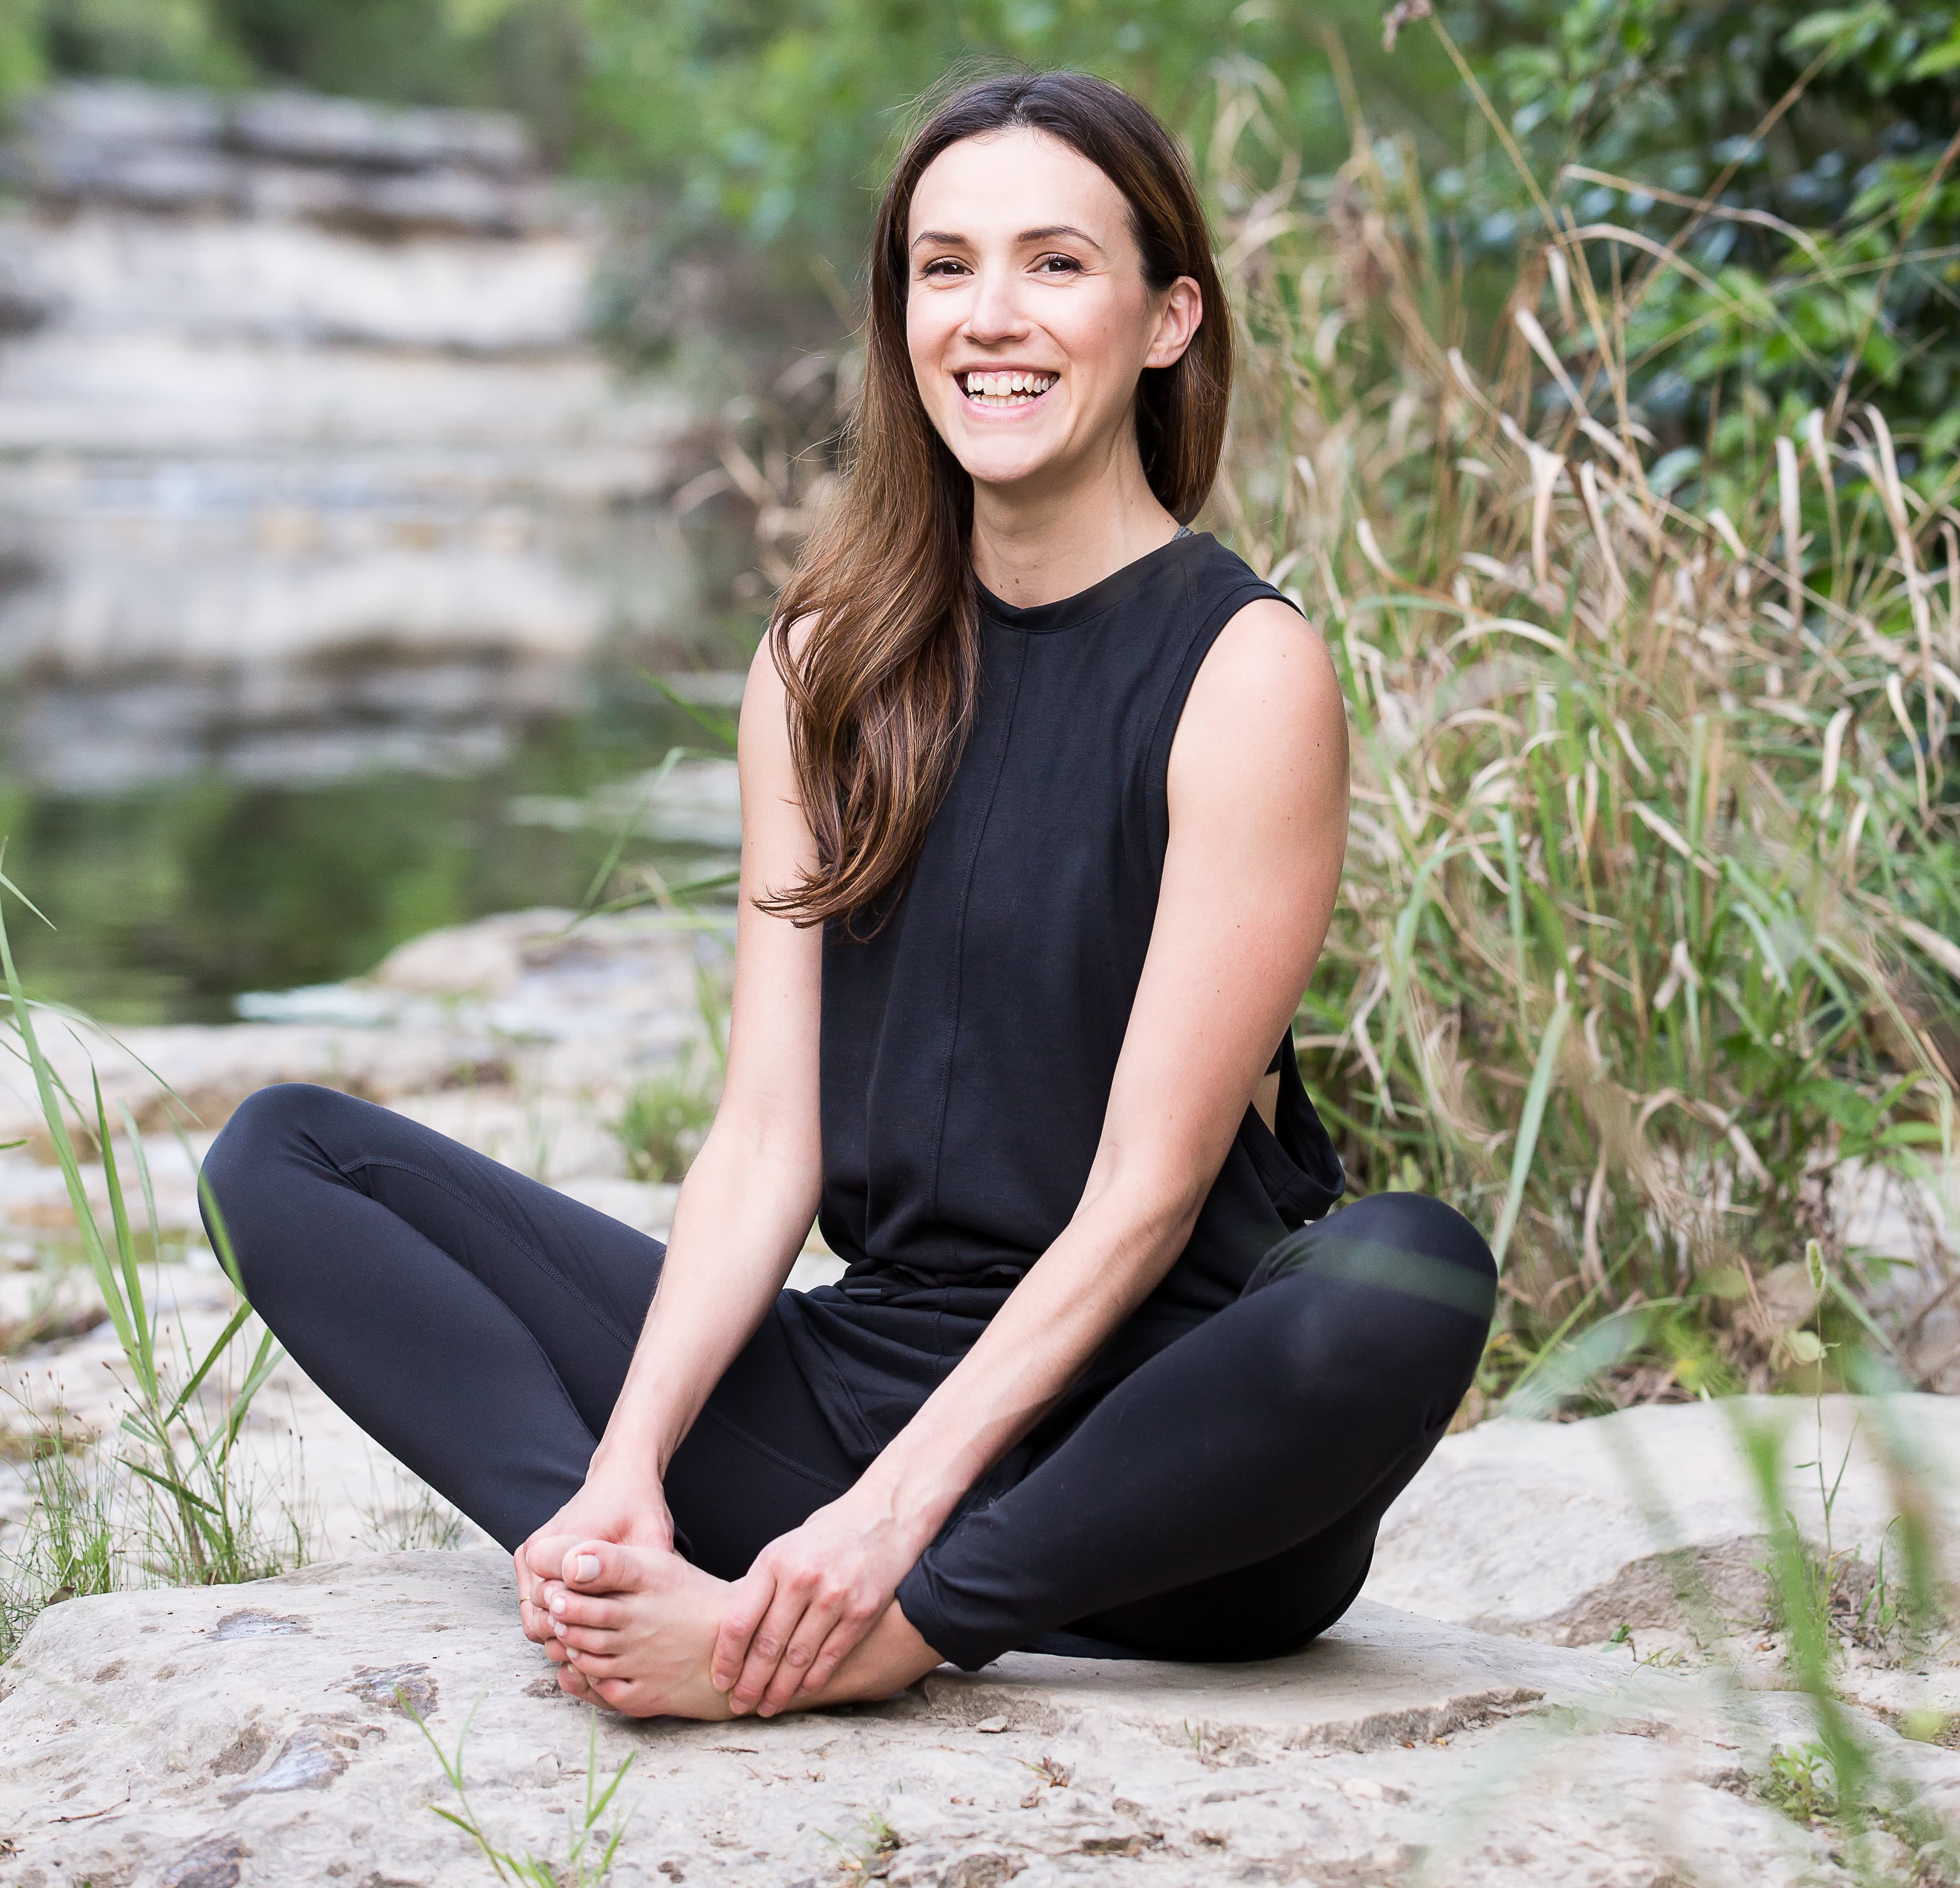 Yoga With Adriene' star Adriene Mishler on the best advice she